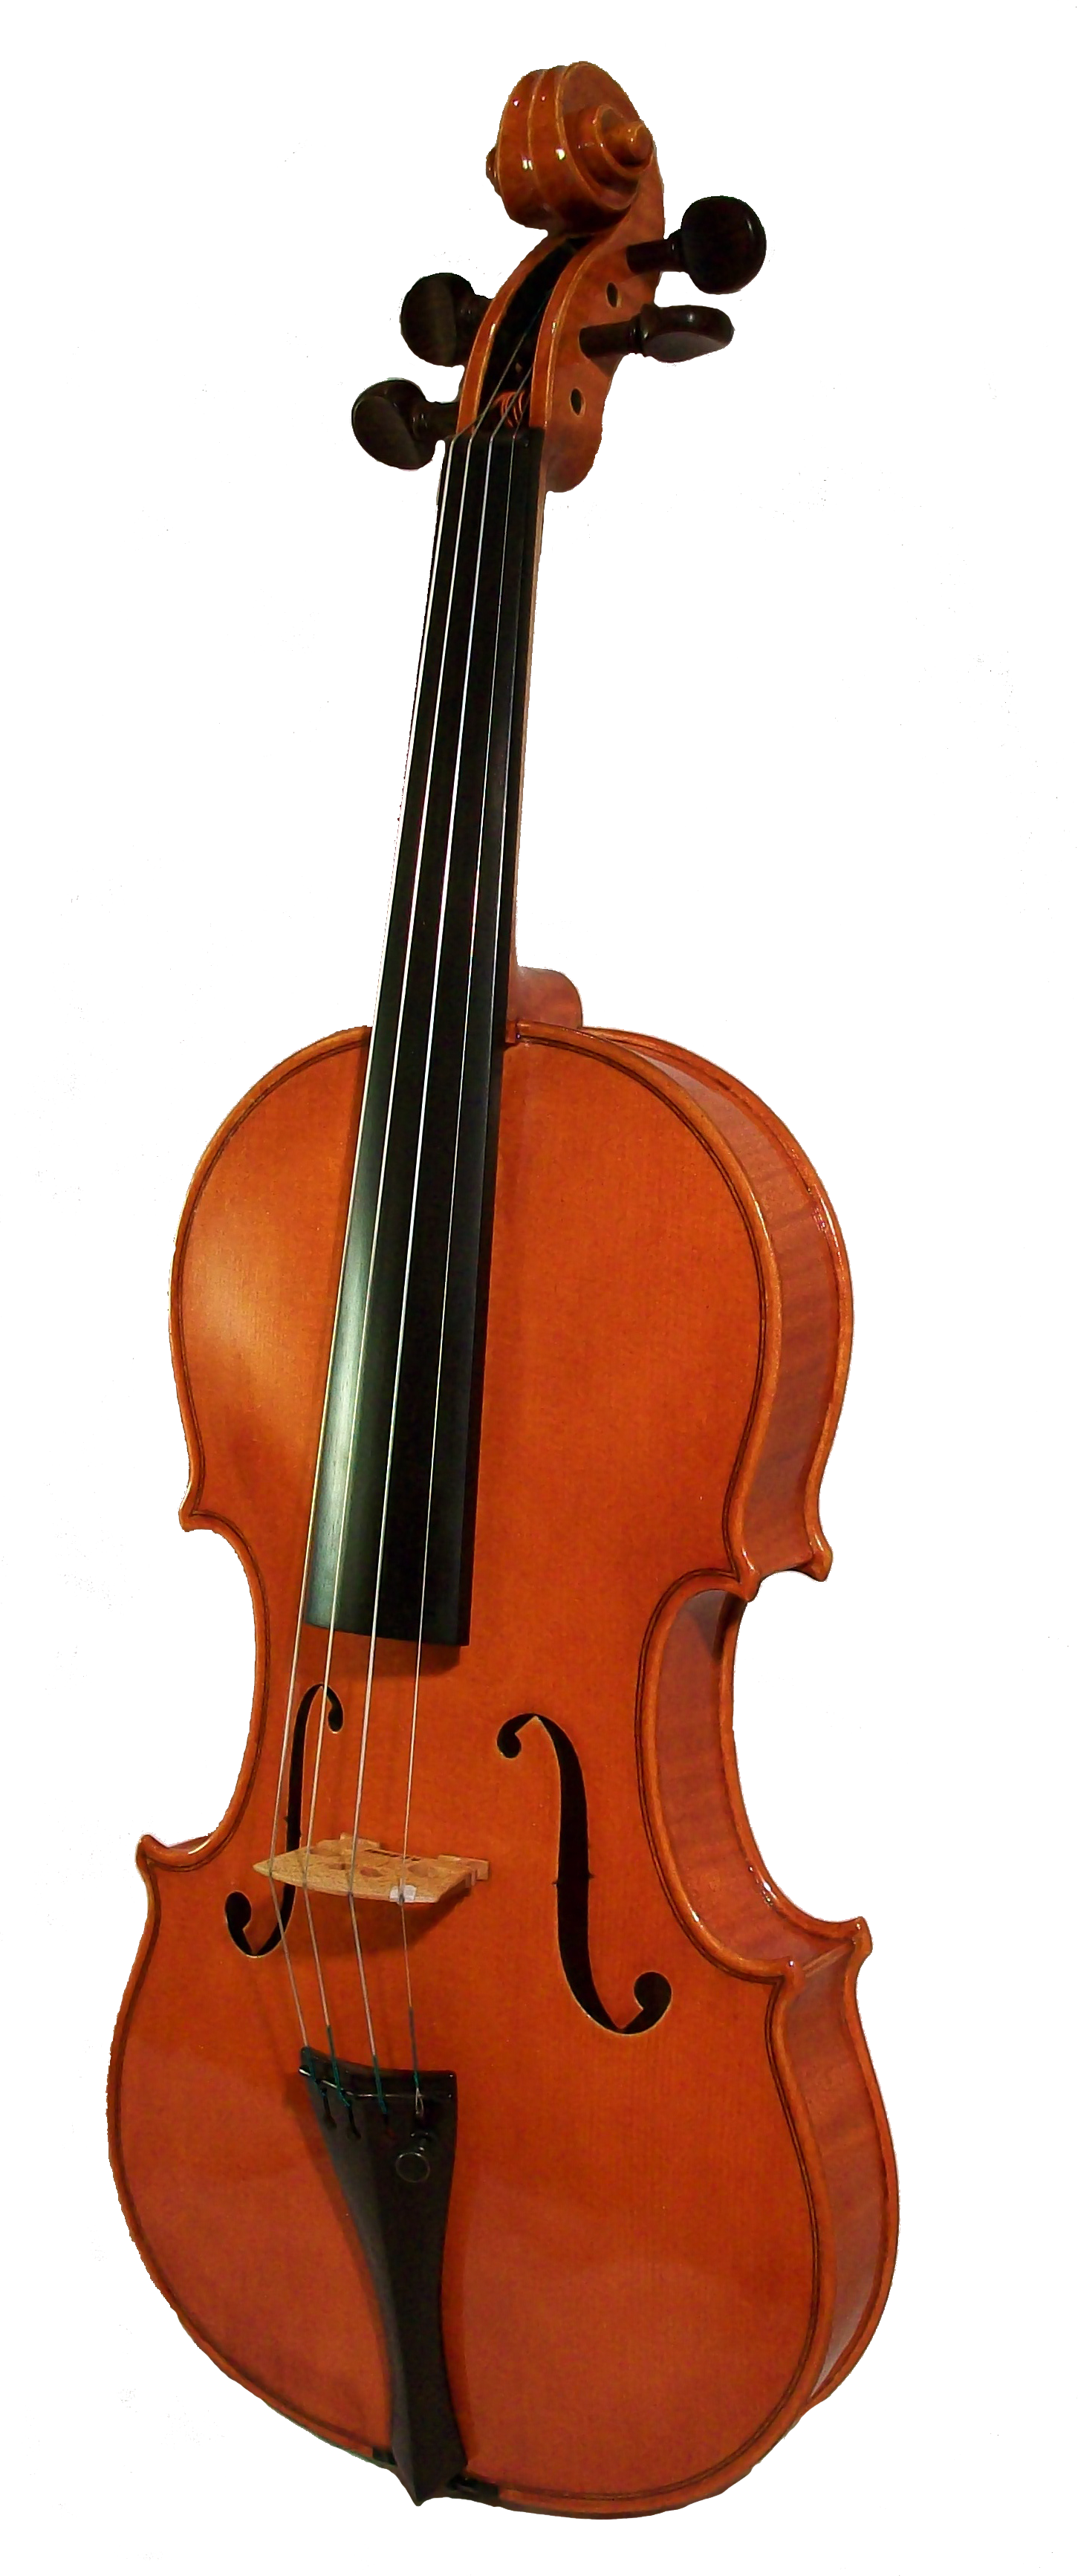 violin real wooden design png free download #29916